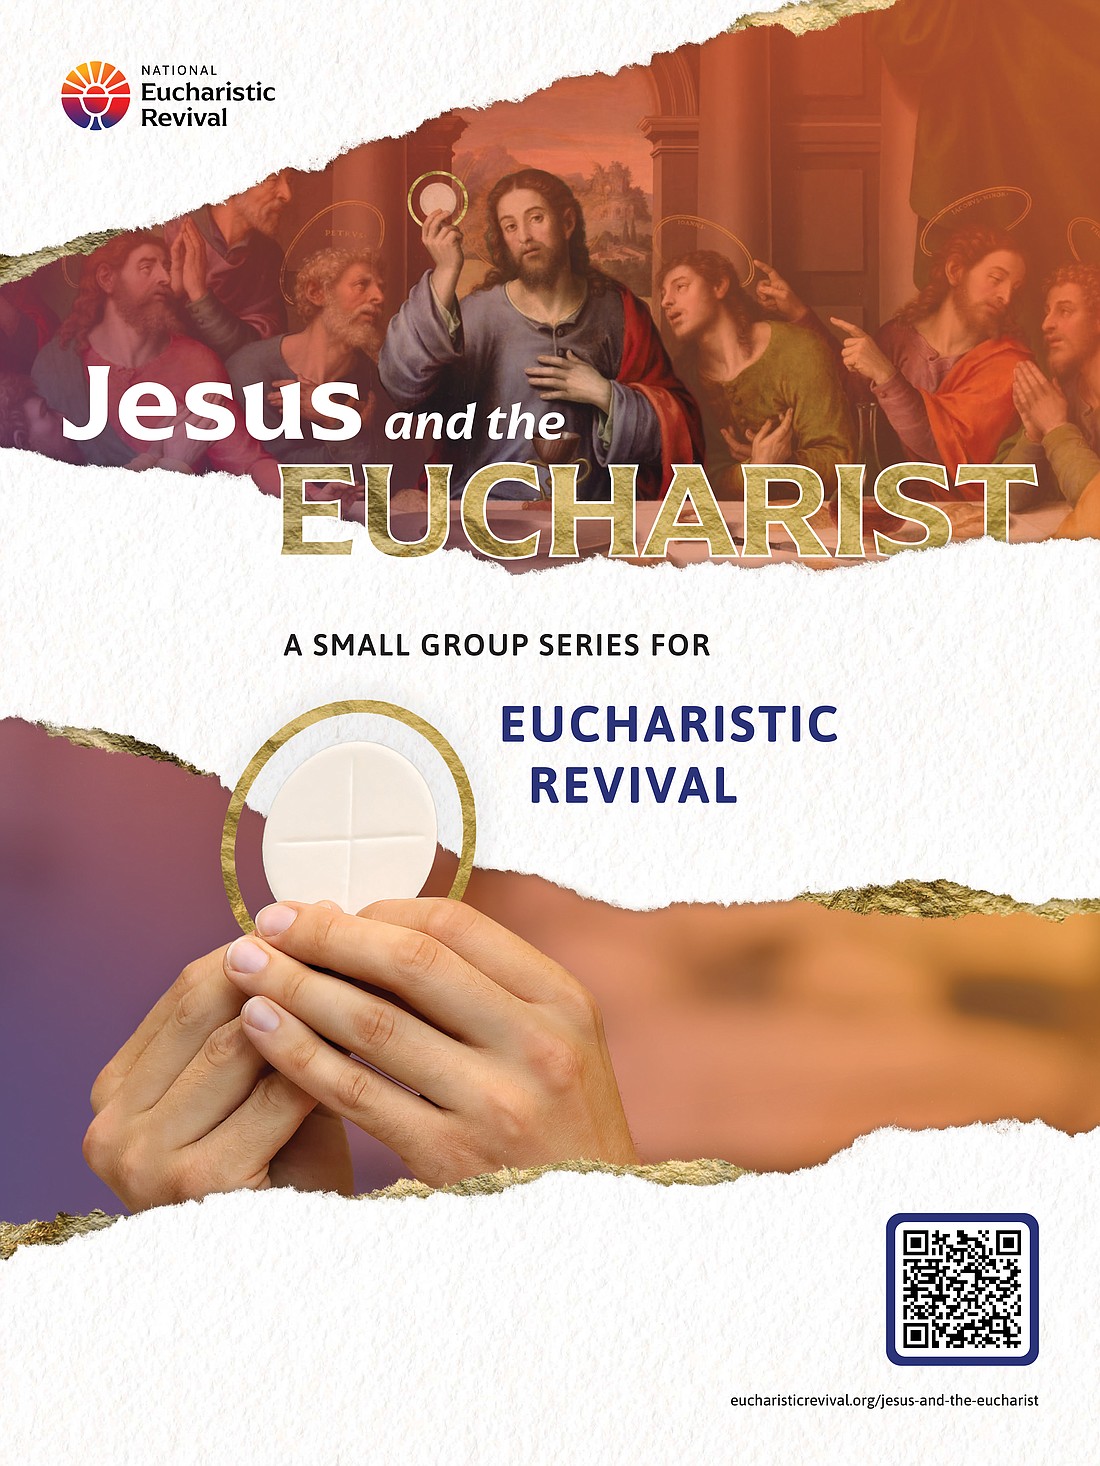 National Eucharistic Revival graphic